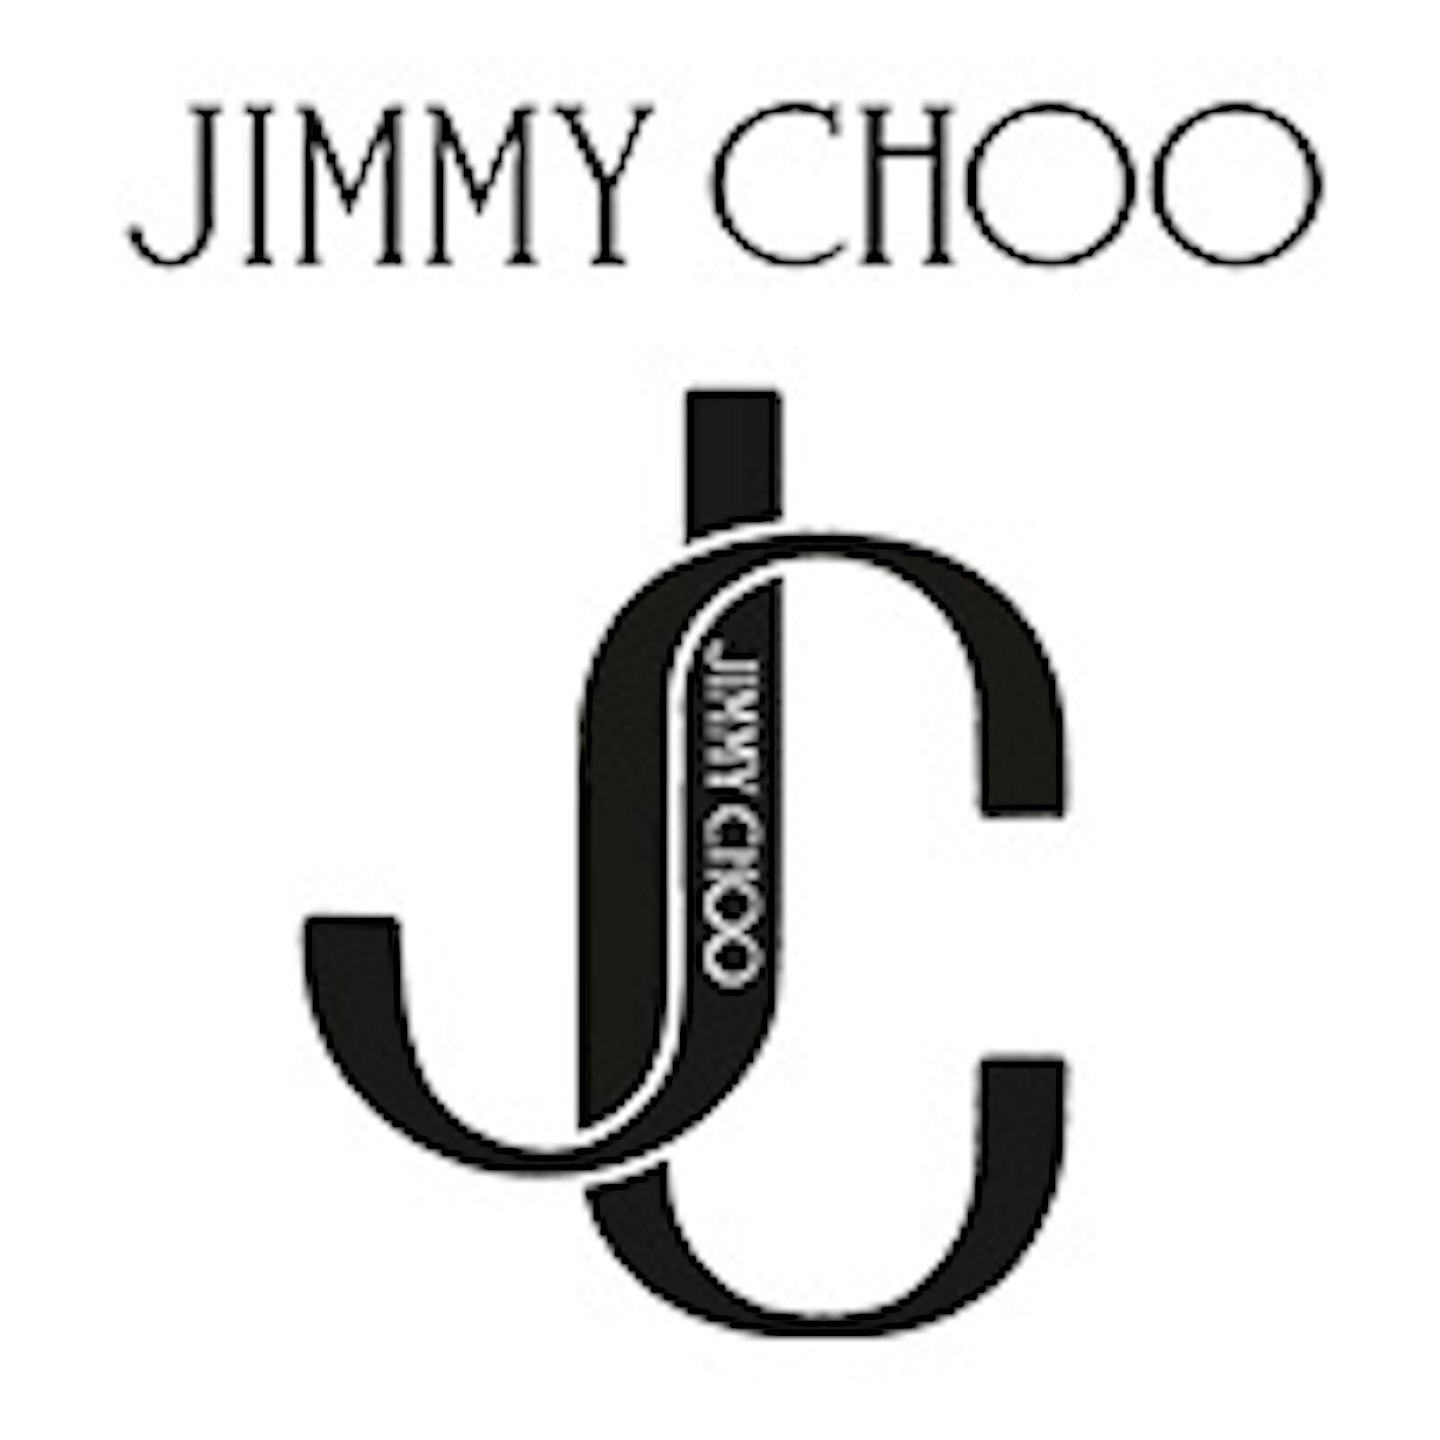 Jimmy Choo Unveils New Bridal Campaign - Get a Sneak Peek at Jimmy